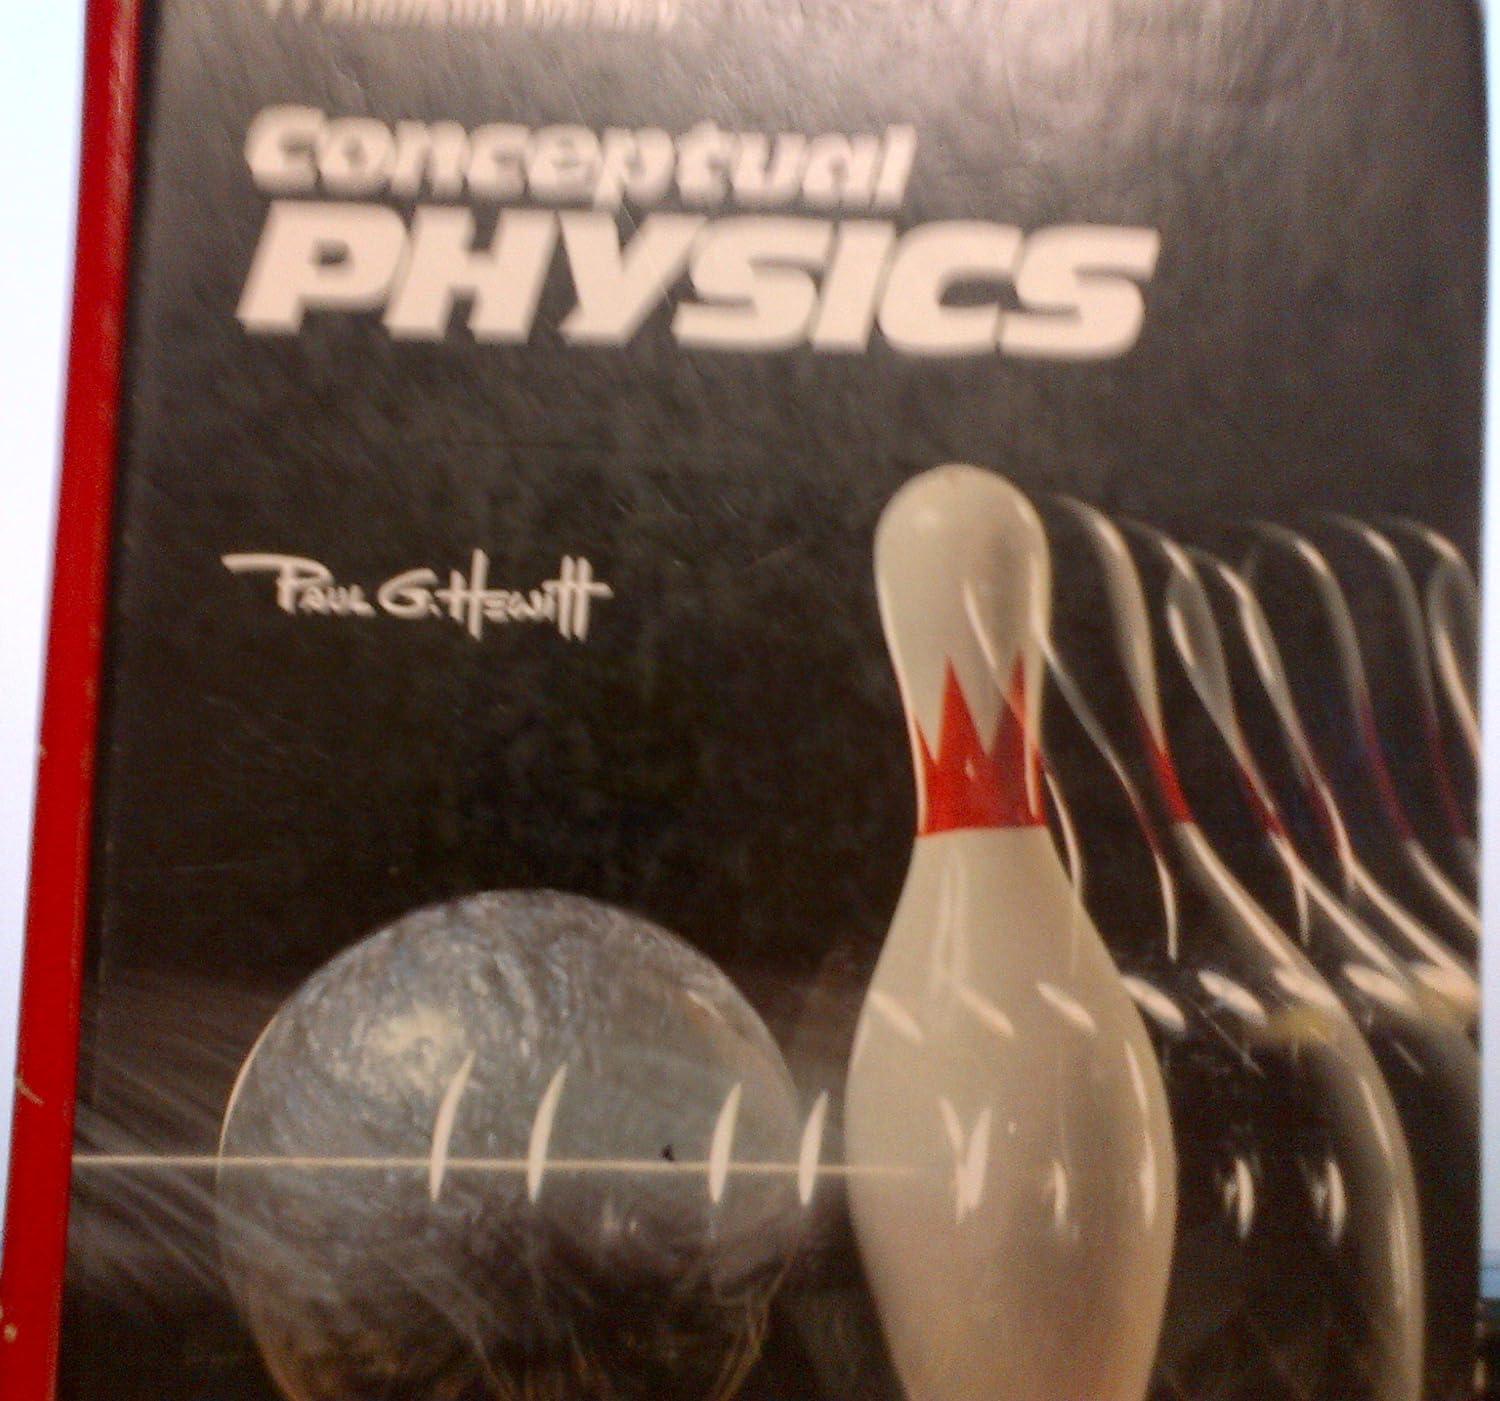 conceptual physics a high school physics program 1st edition paul g. hewitt 0201207281, 978-0201207286